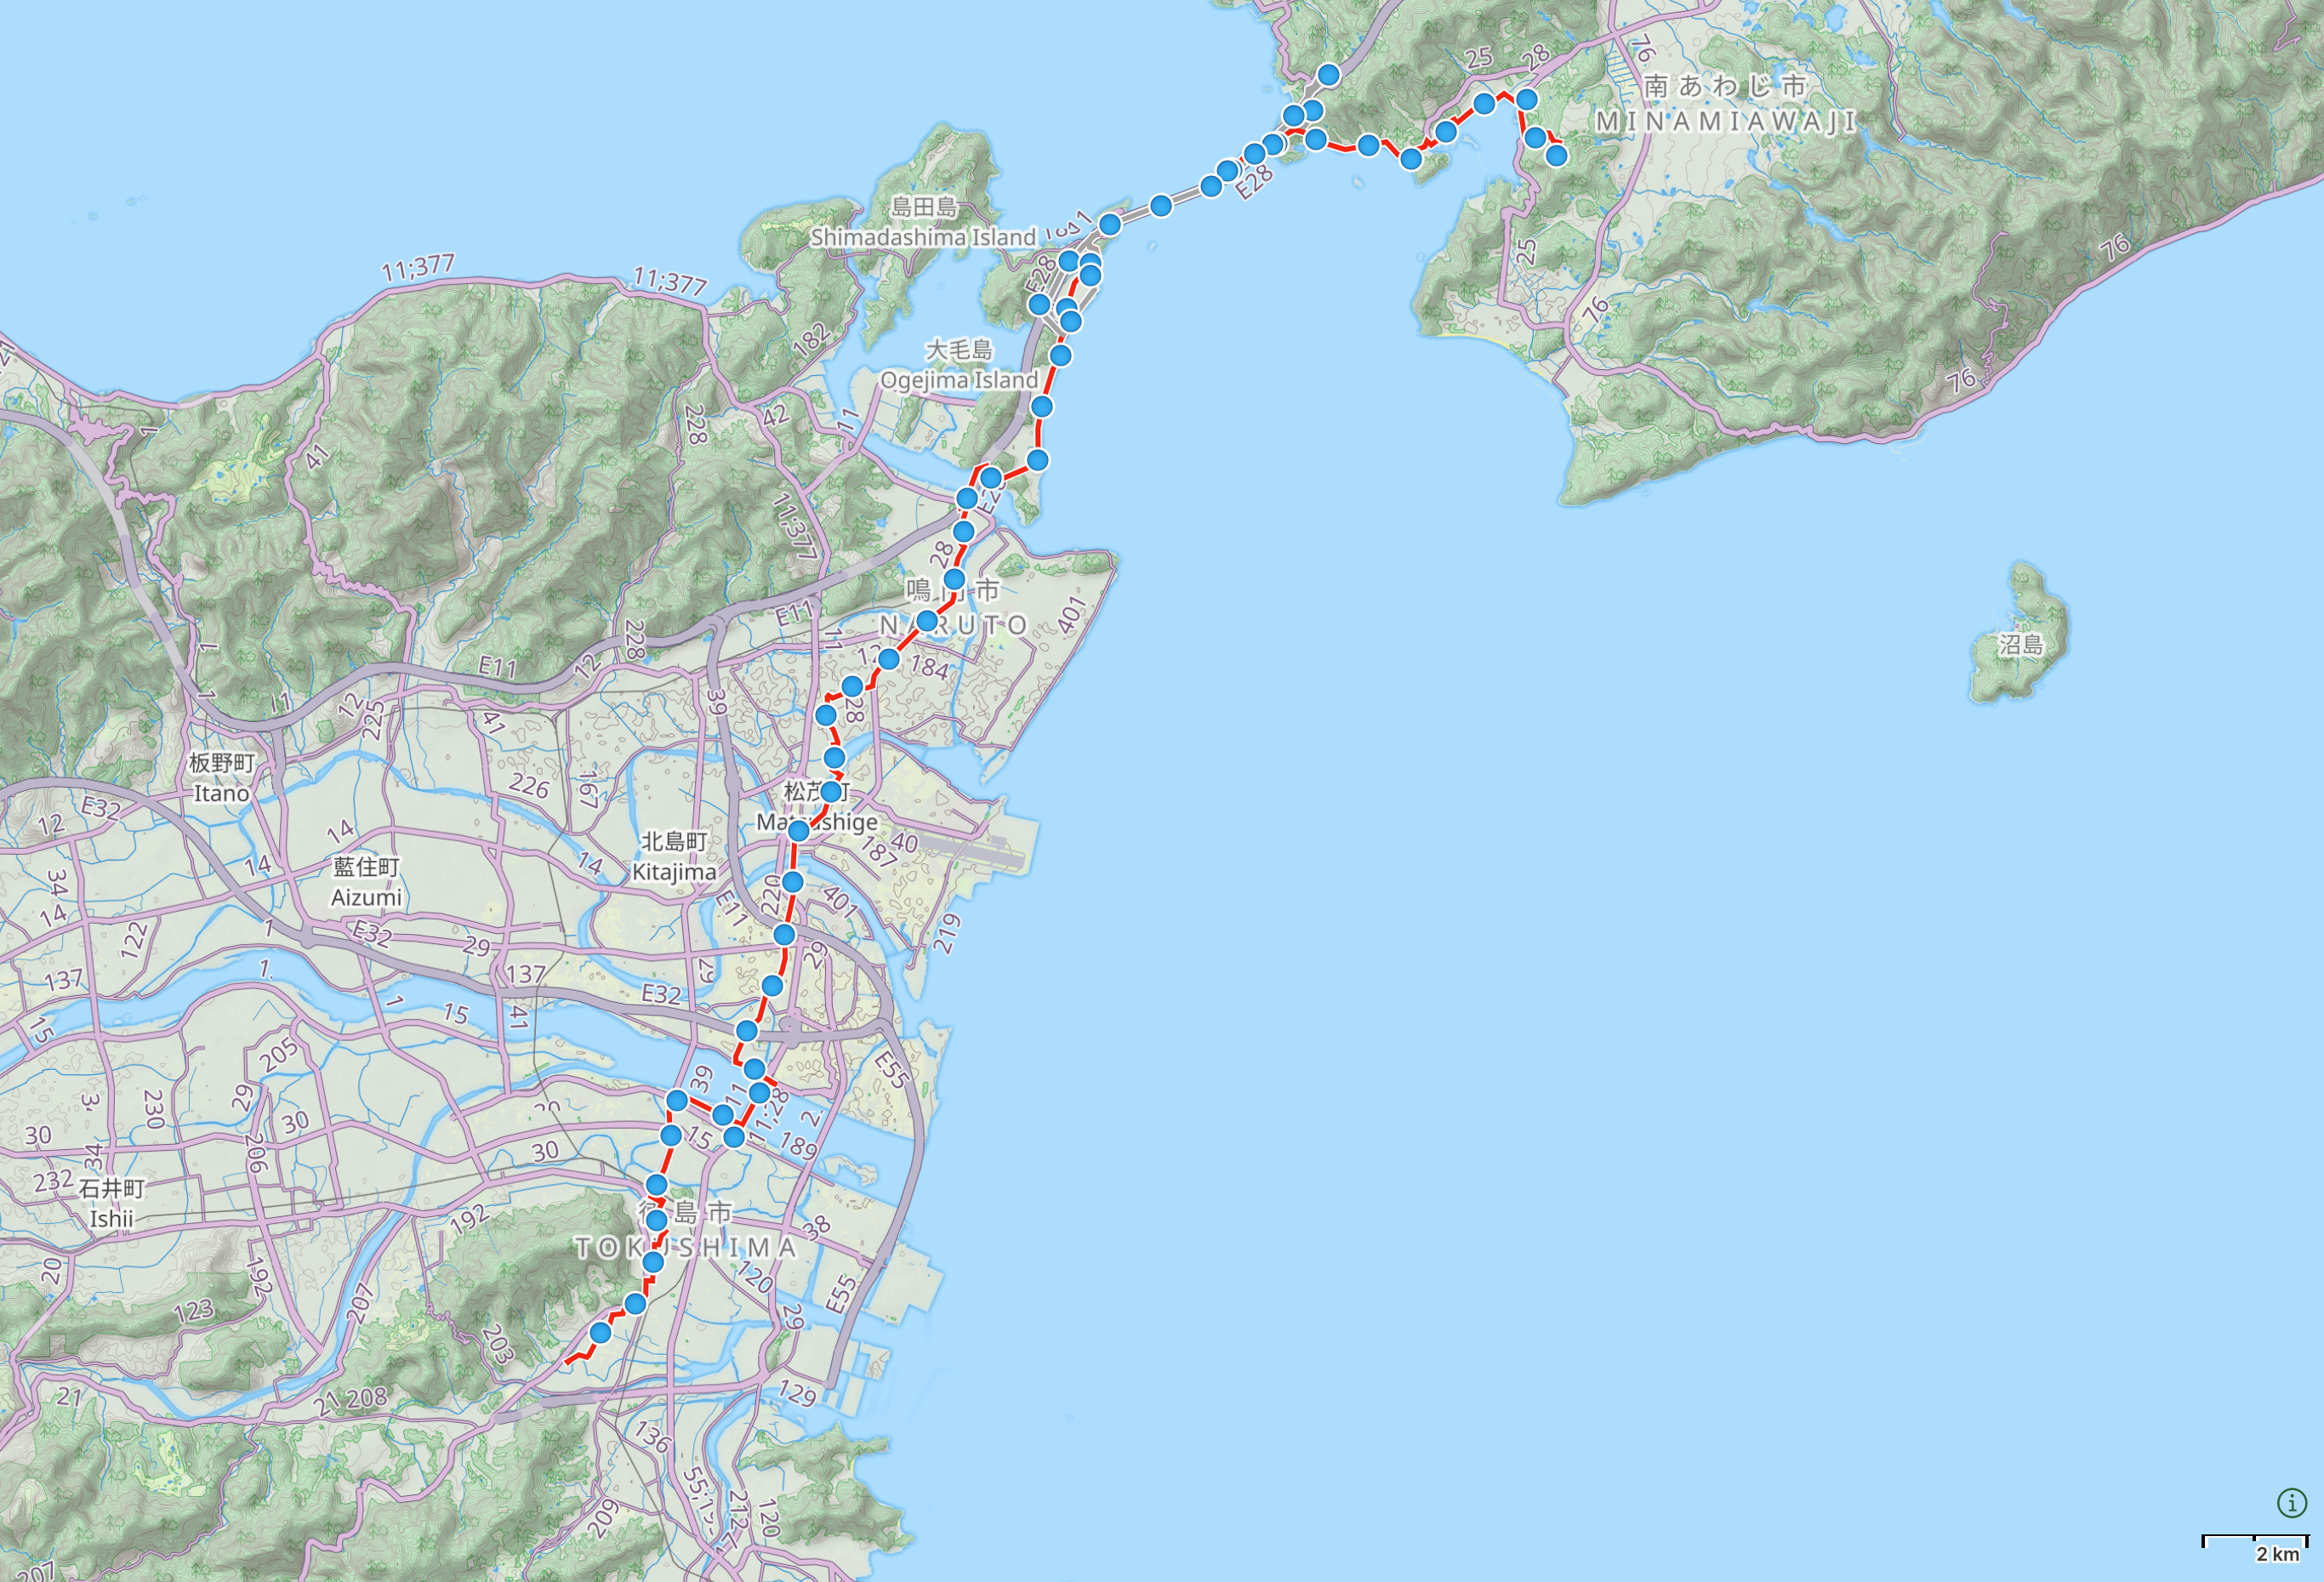 Map of Tokushima Prefecture and Awaji Island with route between Tokushima City and Naruto highlighted.